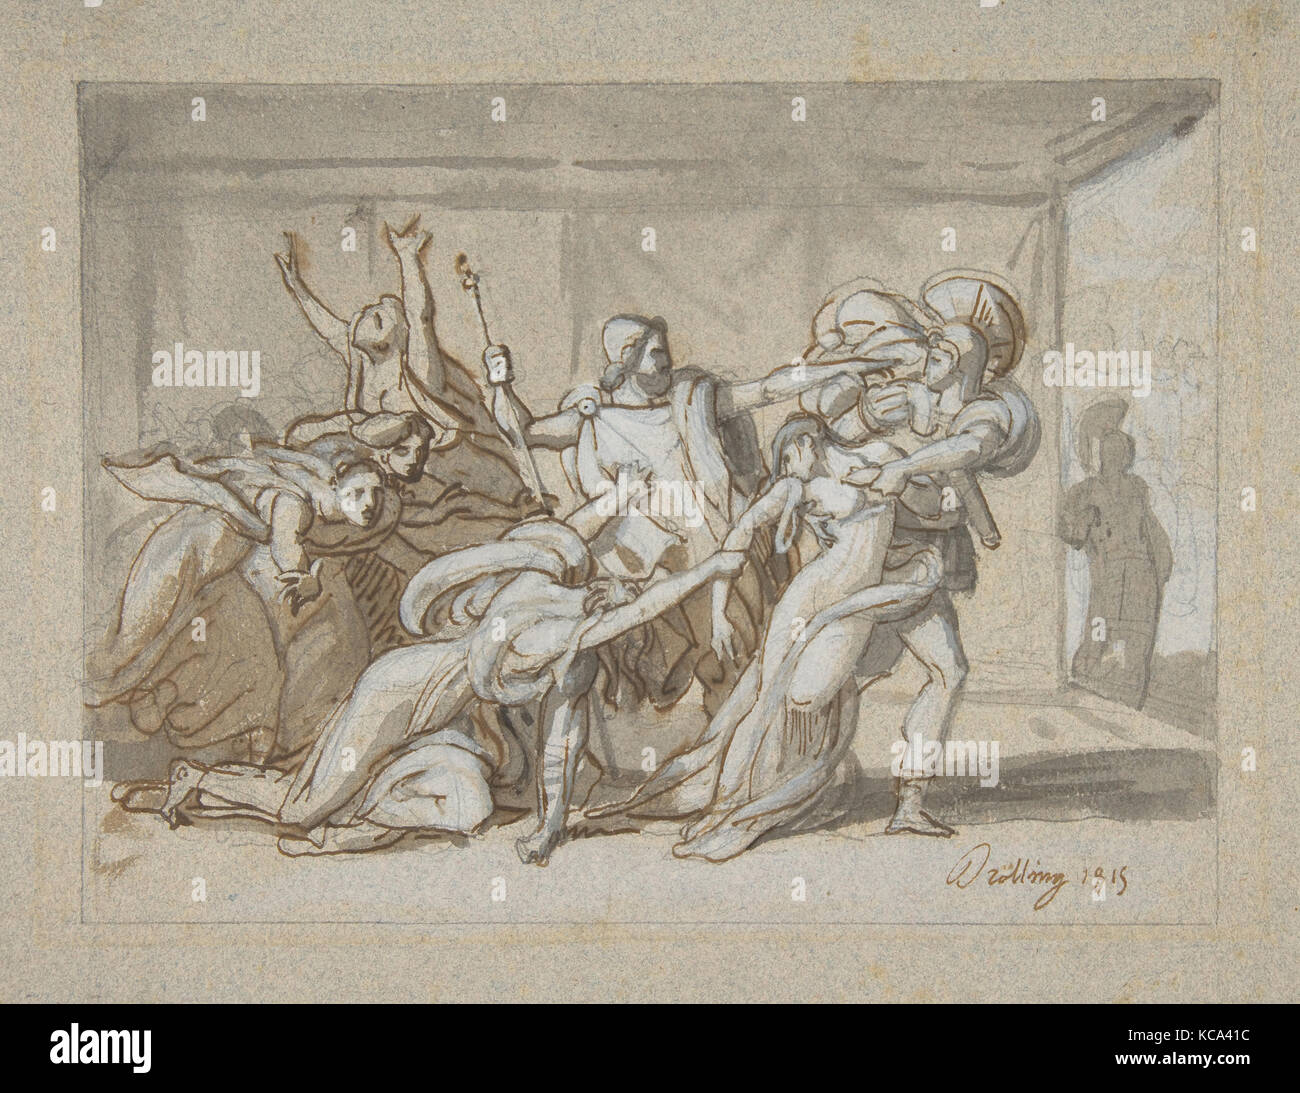 Scene from the Iliad, Michael Martin Drölling, 1815 Stock Photo